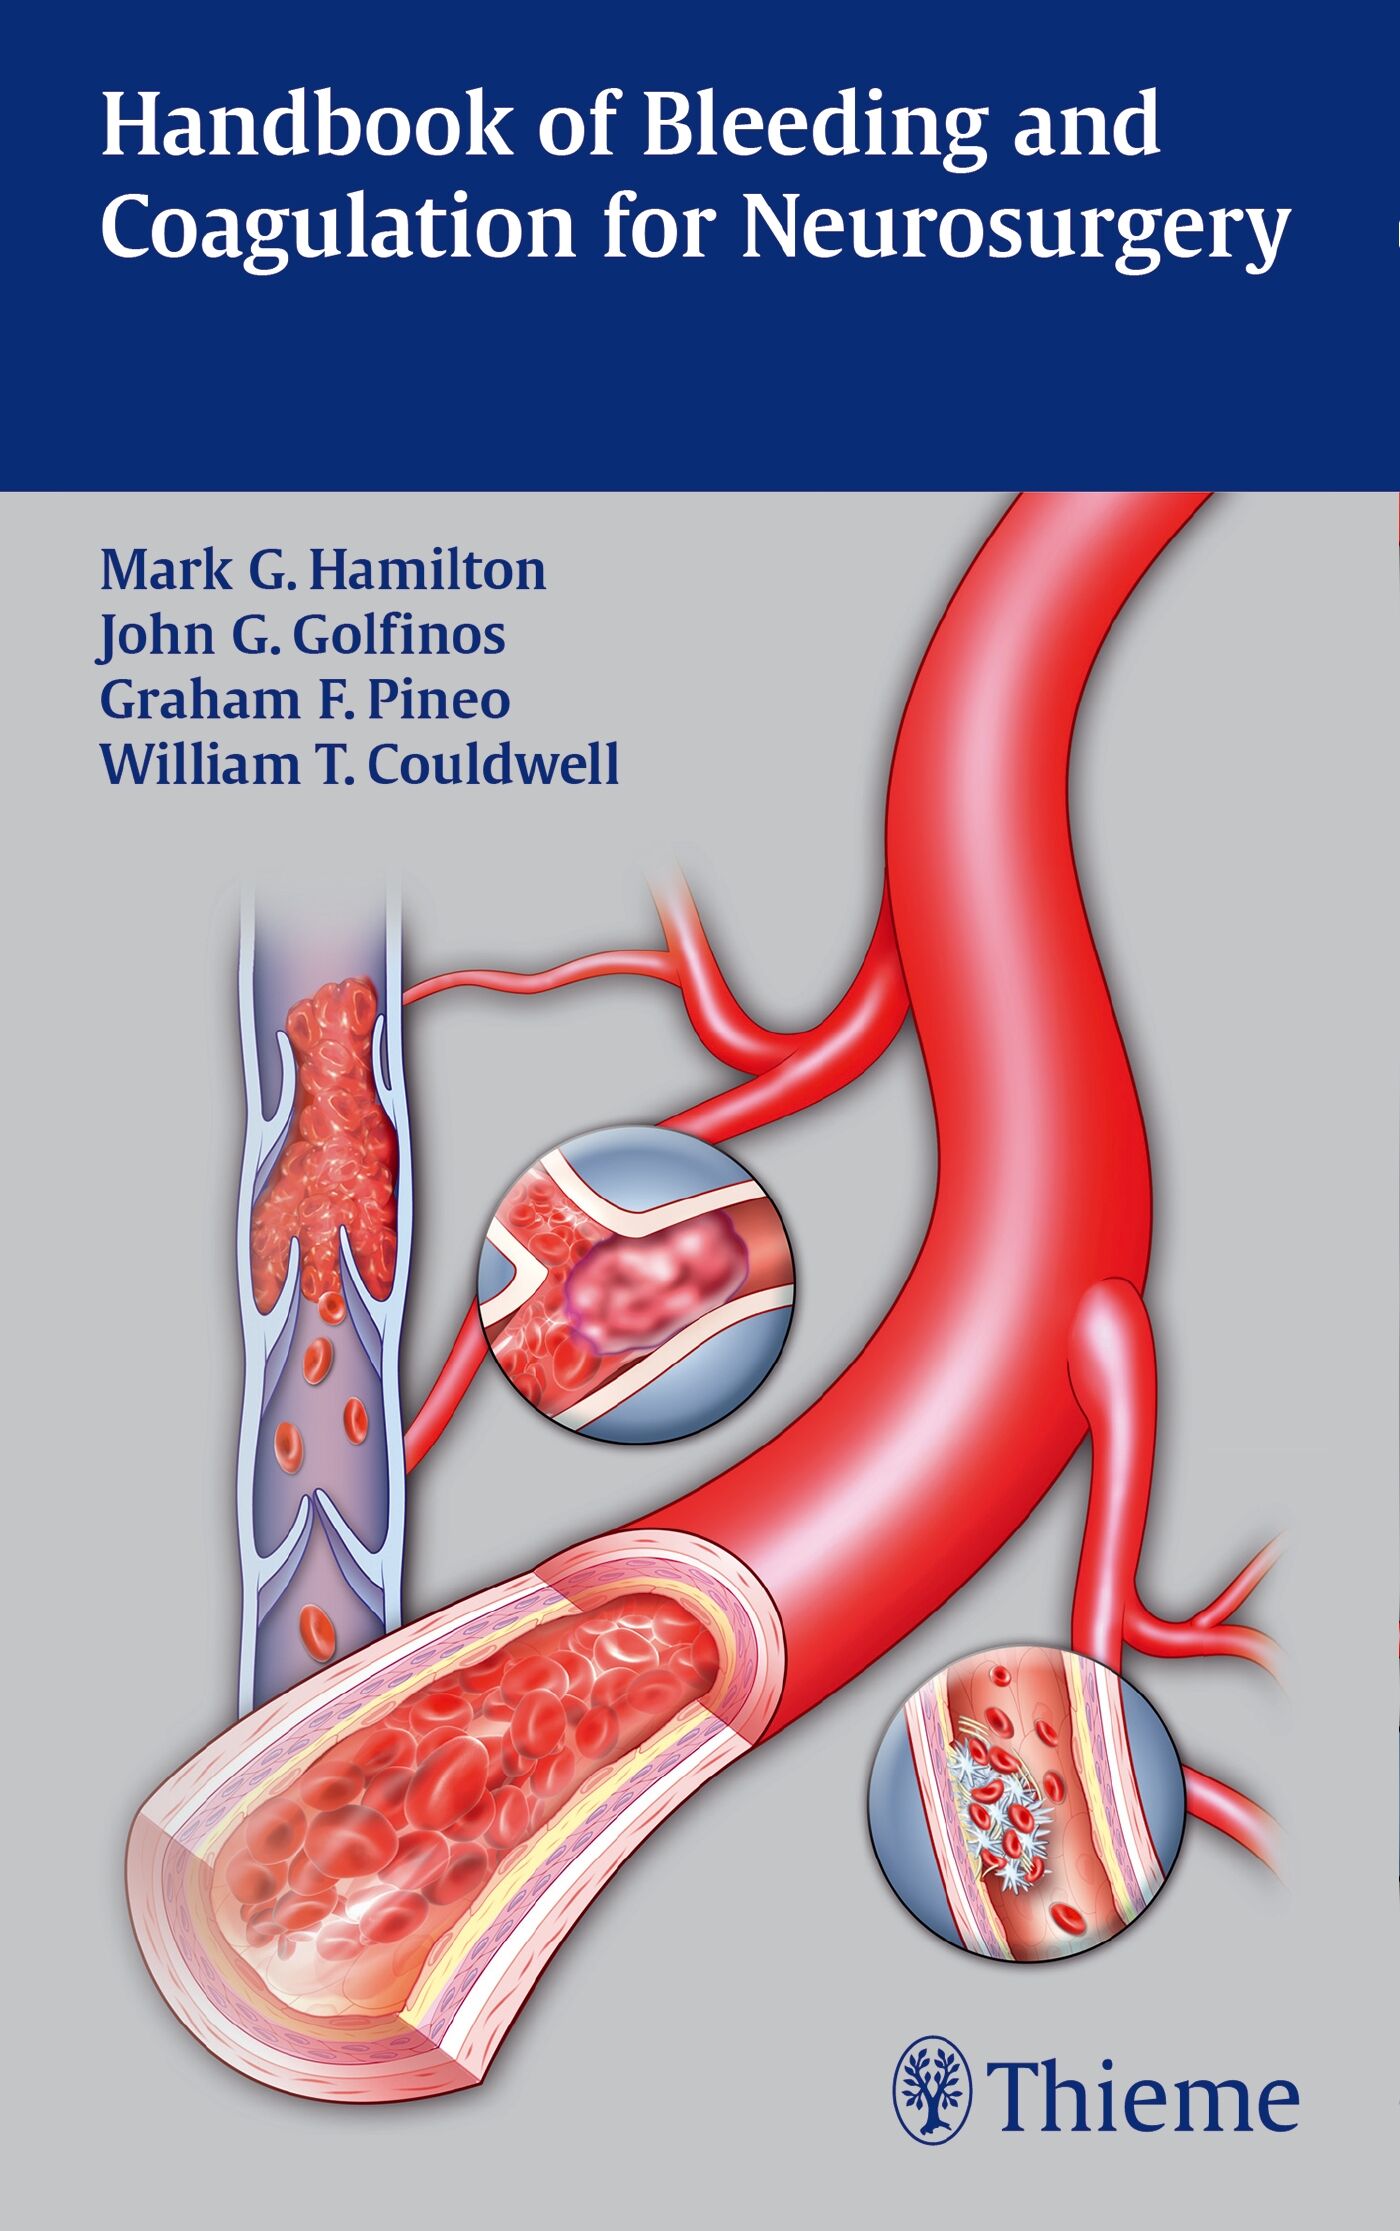 Handbook of Bleeding and Coagulation for Neurosurgery, 9781604065442